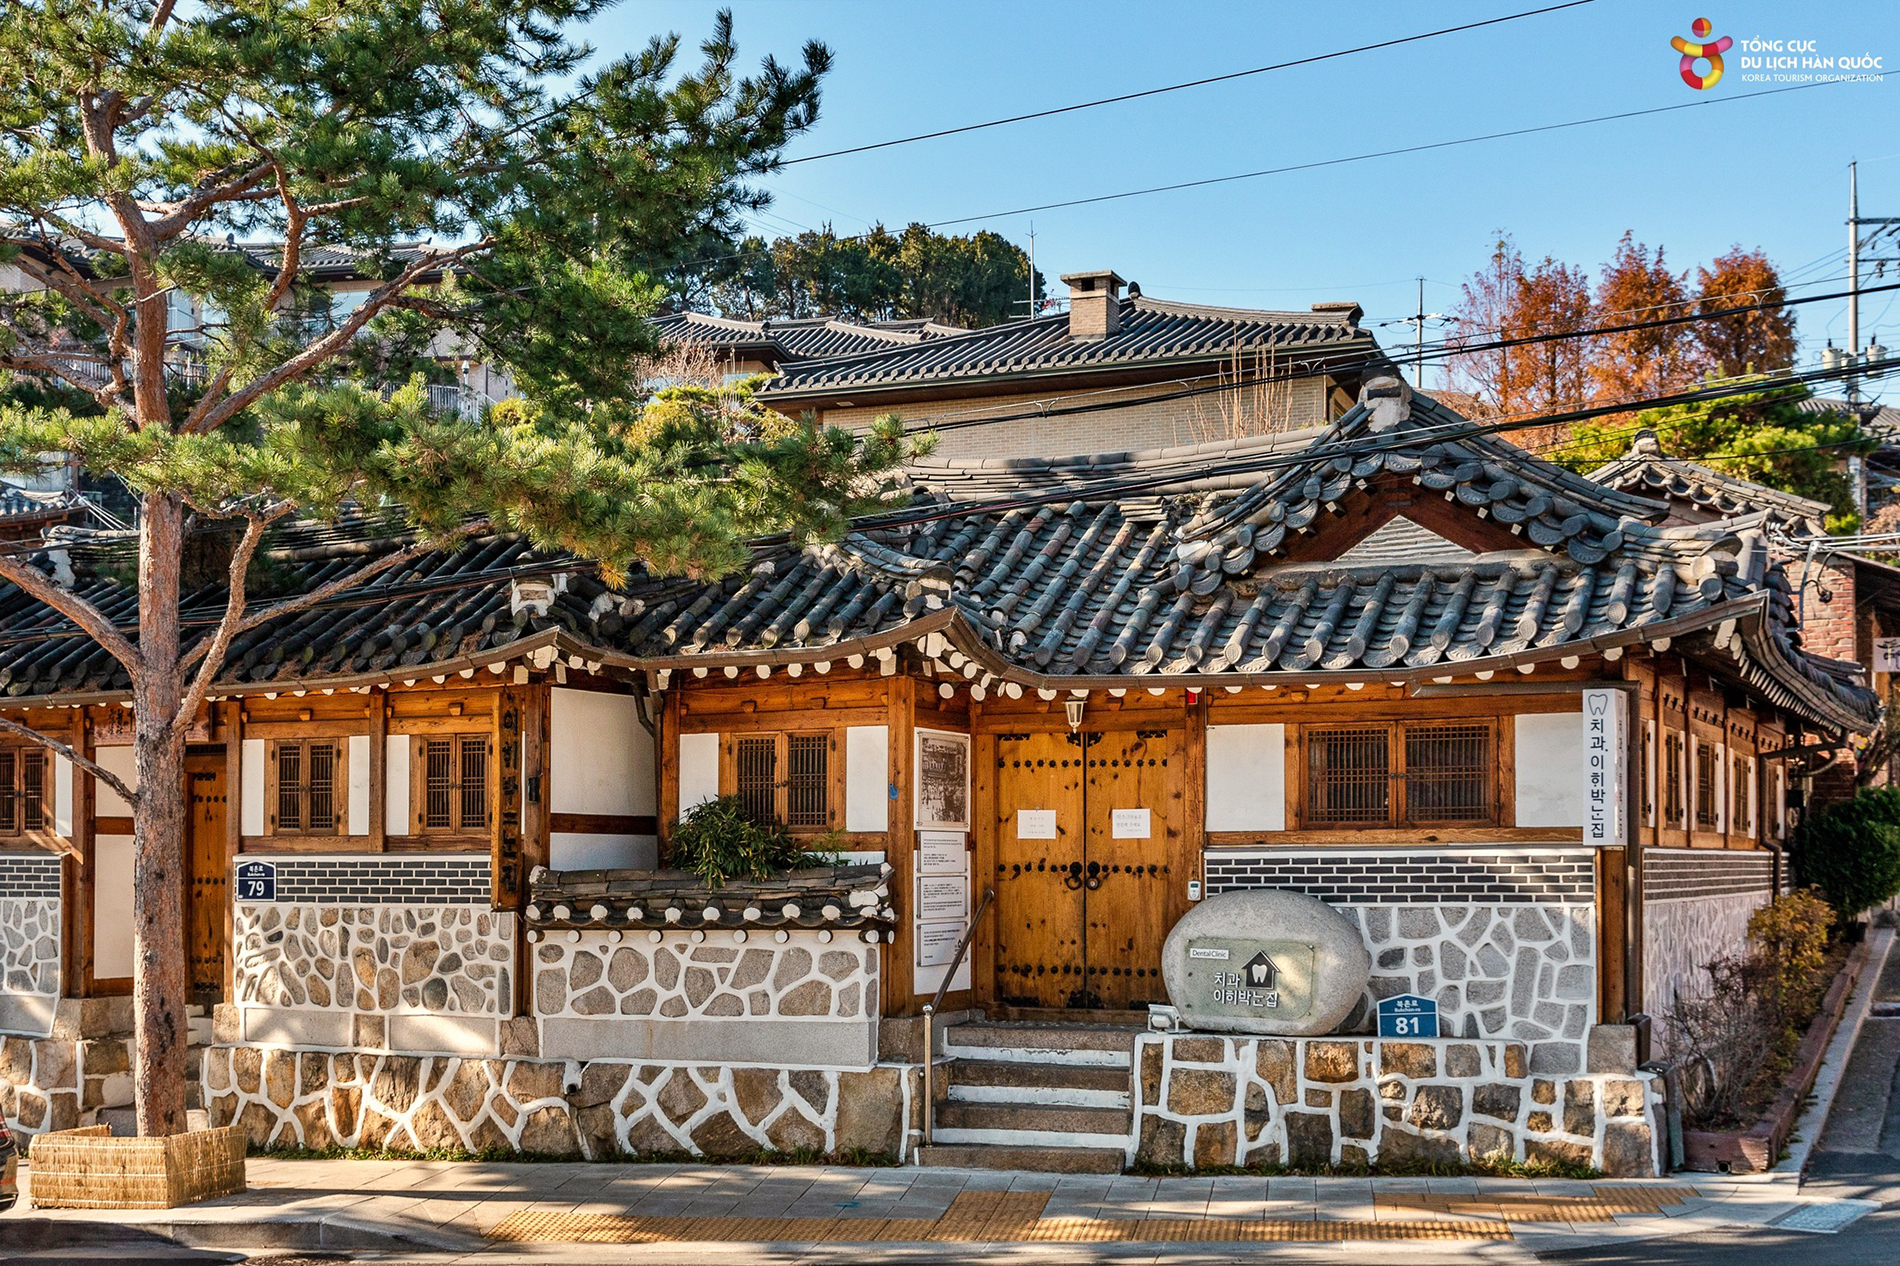 South Korea Travel Guide - Image 9